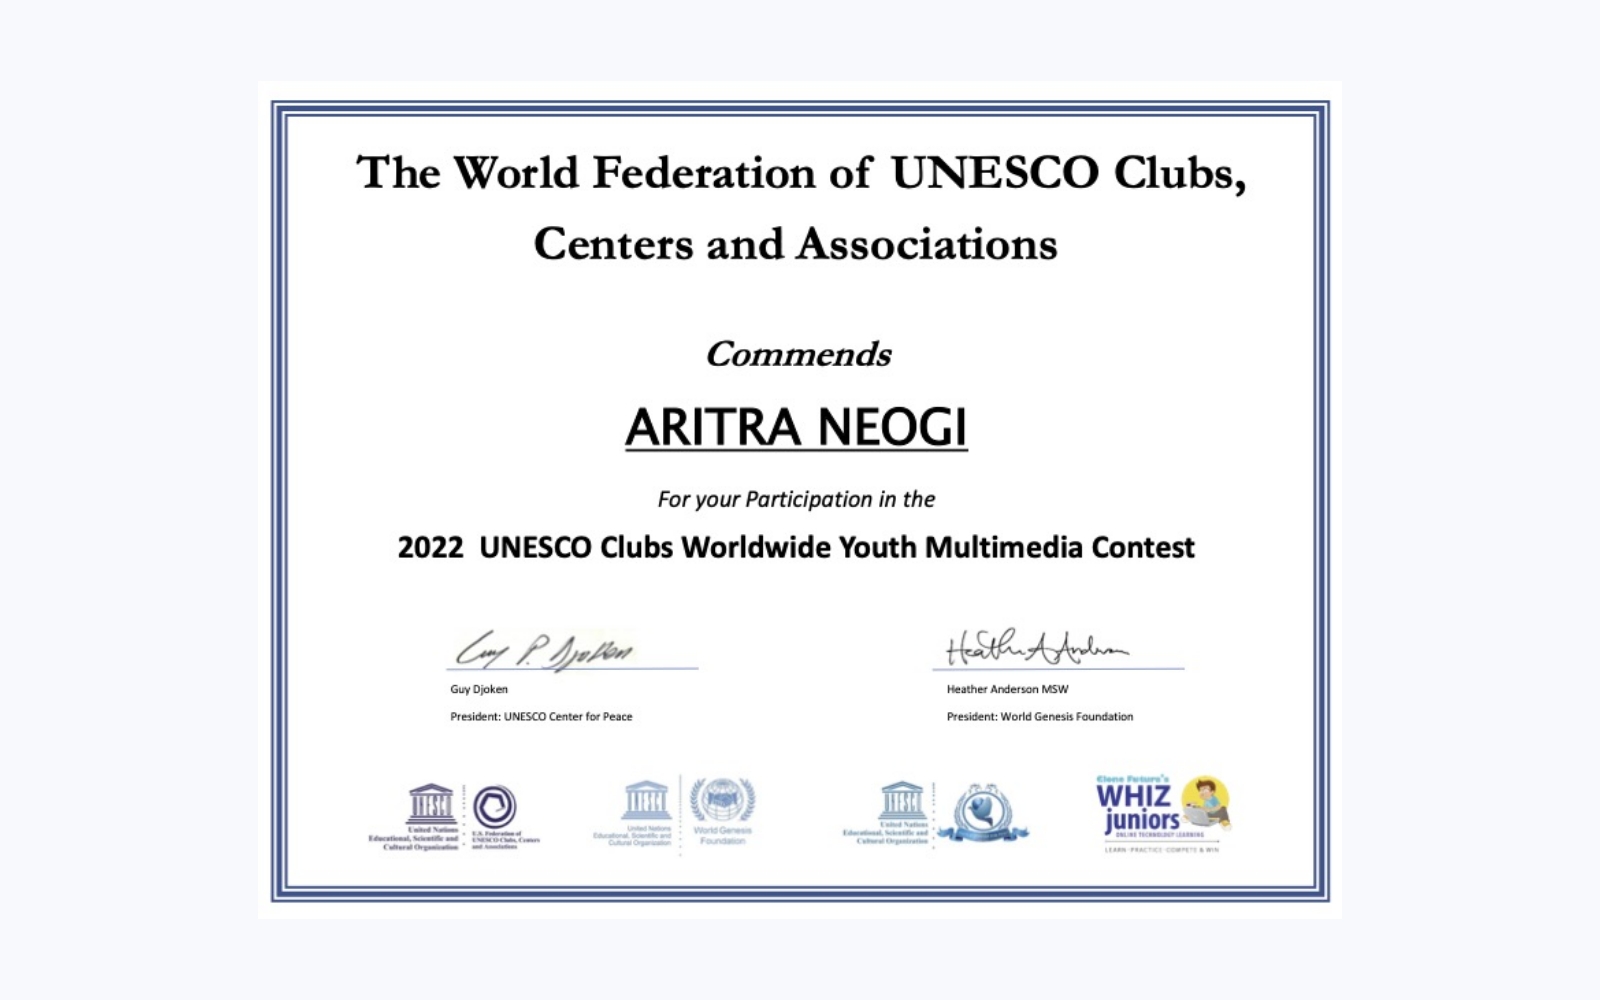 Aritra Neogi participated in UNESCO Worldwide Youth Multimedia Contest